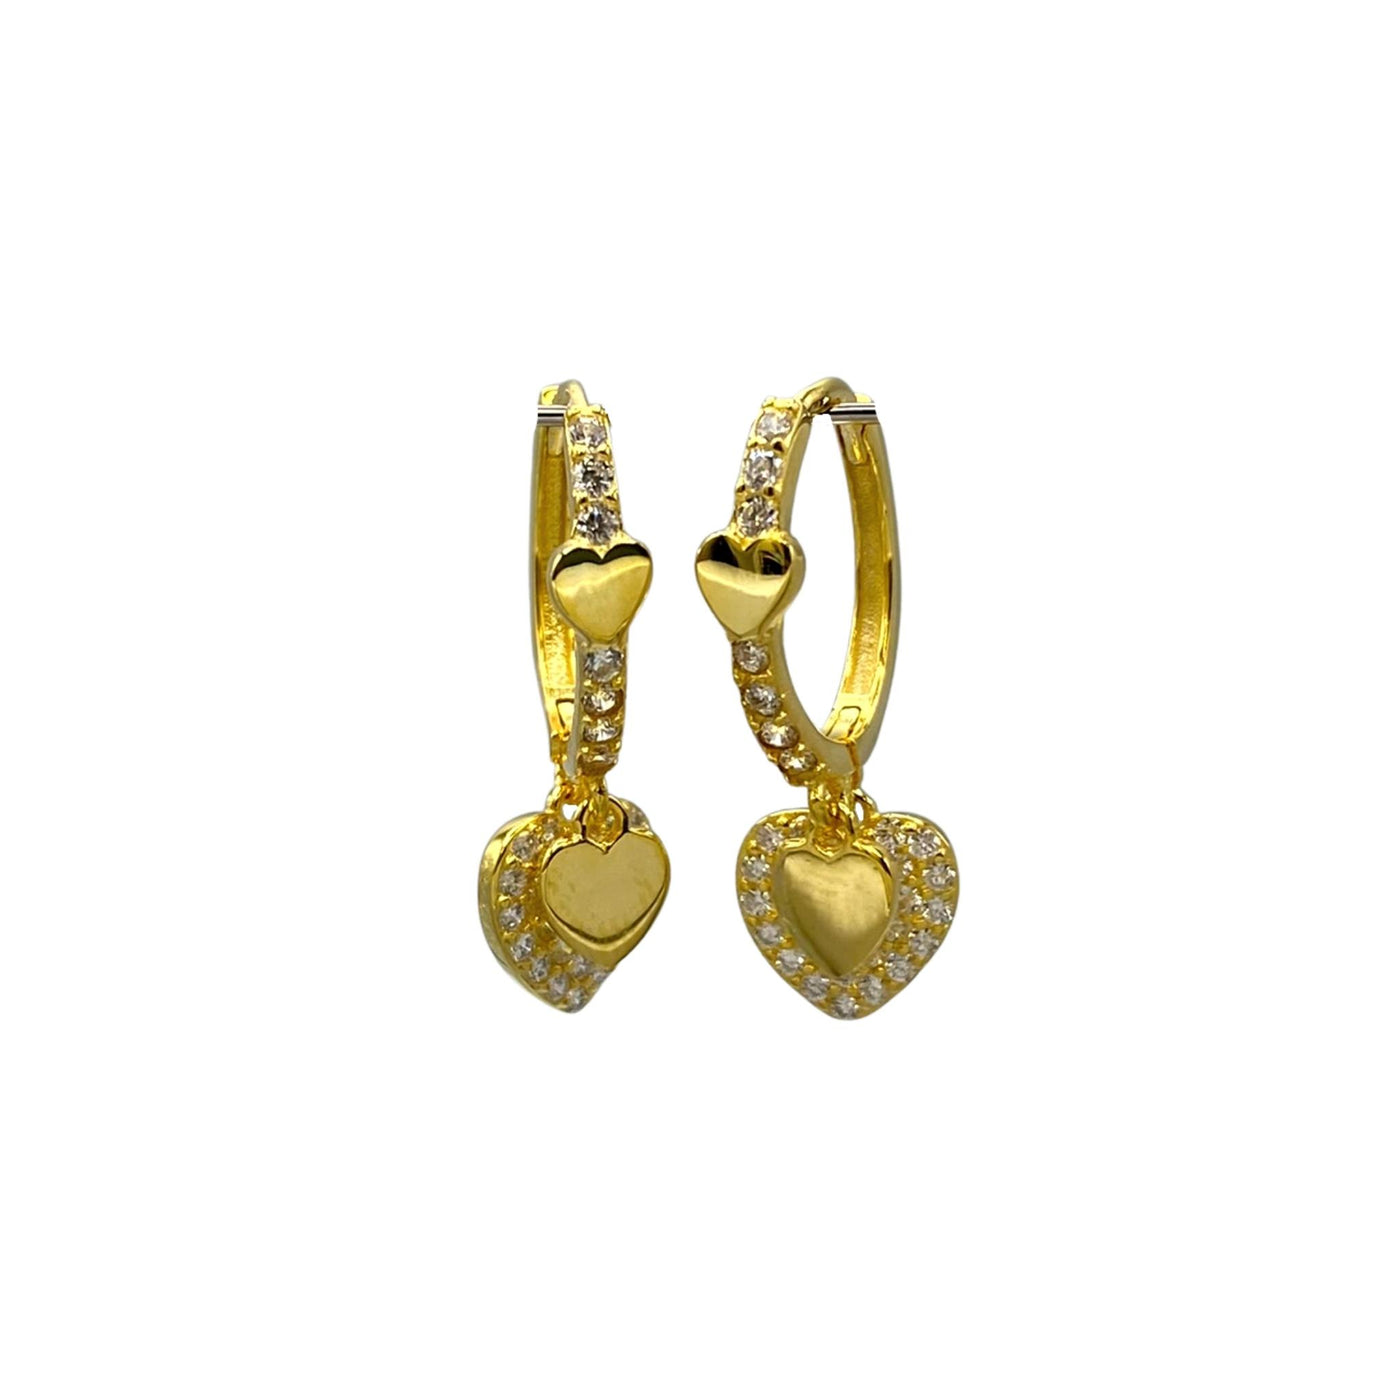 Silver hoop earrings with hearts